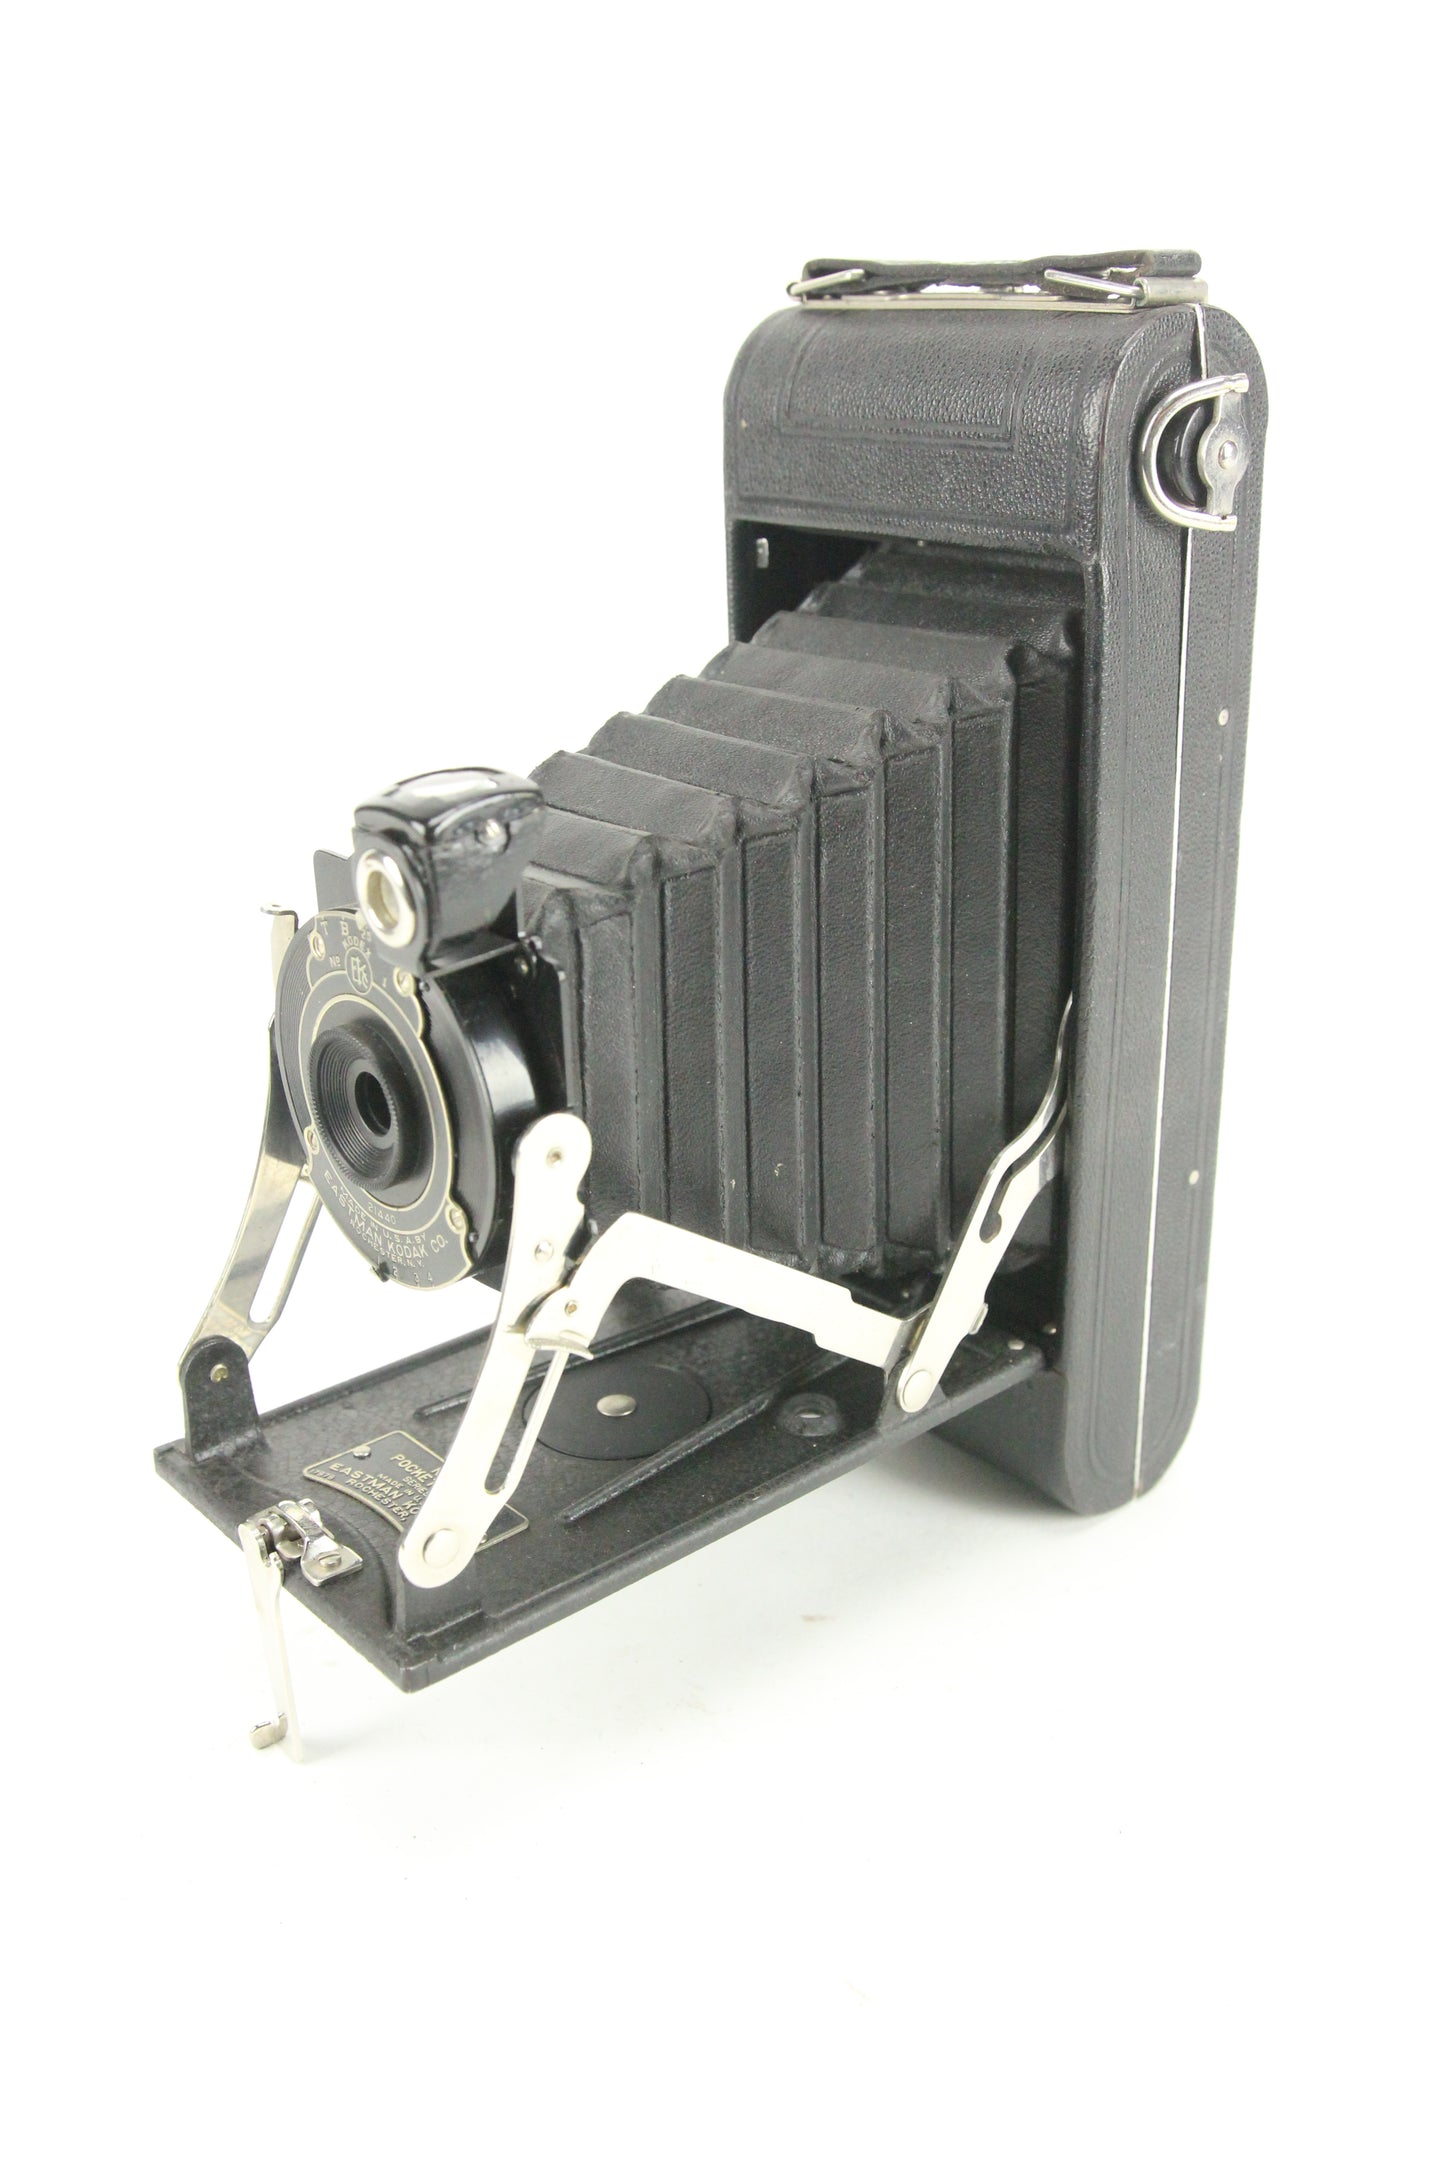 Eastman Kodak No. 1A Pocket Kodak Series II Folding Camera